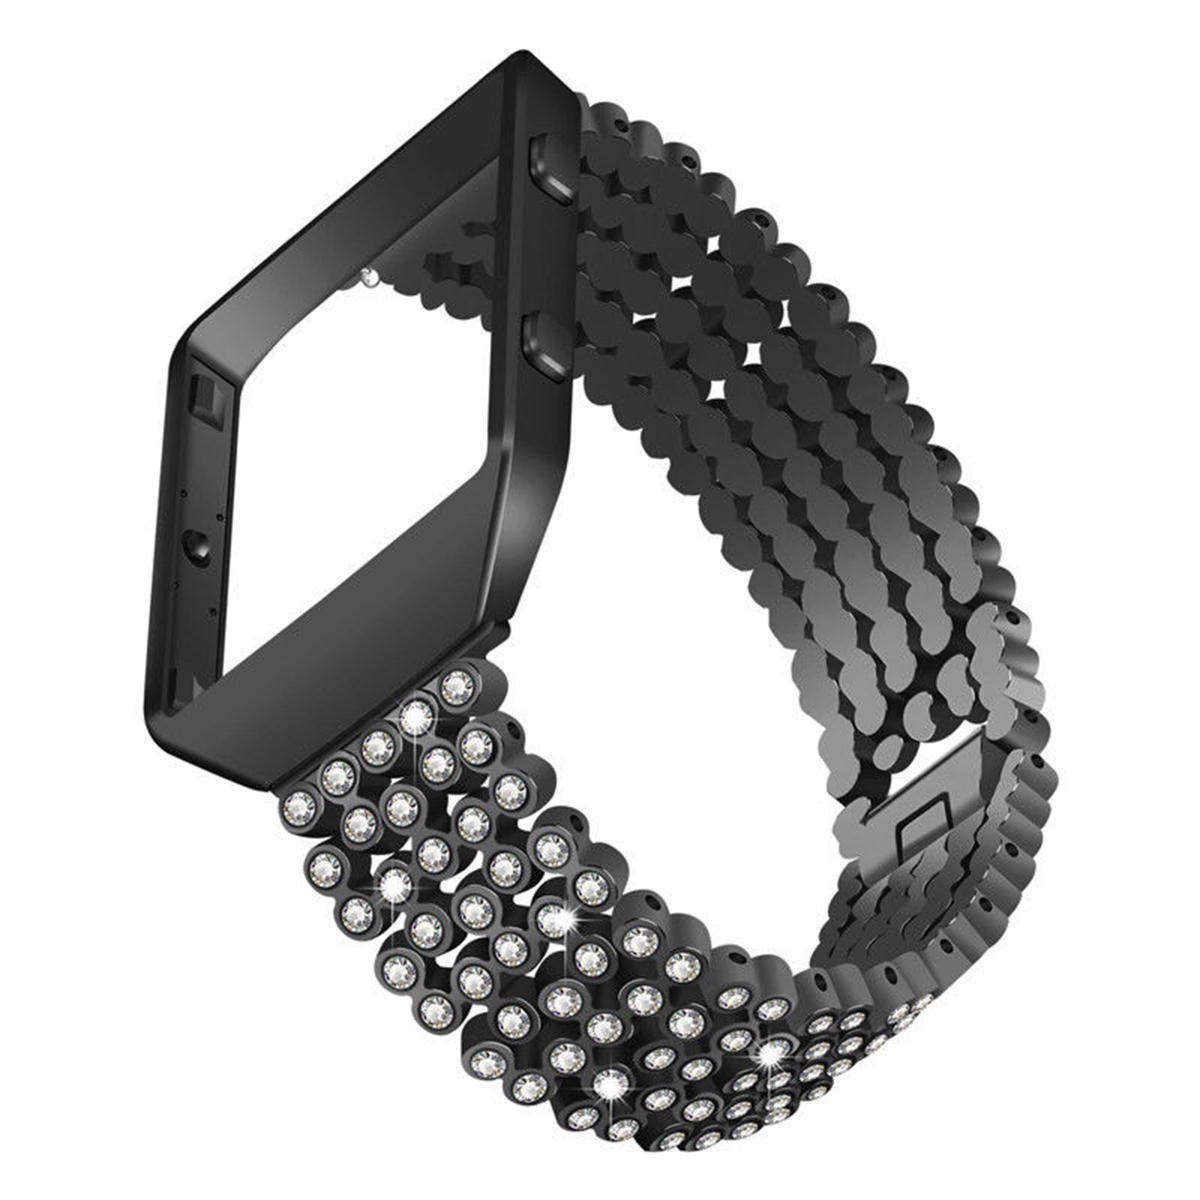 Strap + Frame Vervanging Armband Wrist Band Voor Fitbit Blaze Smart Watch Bands